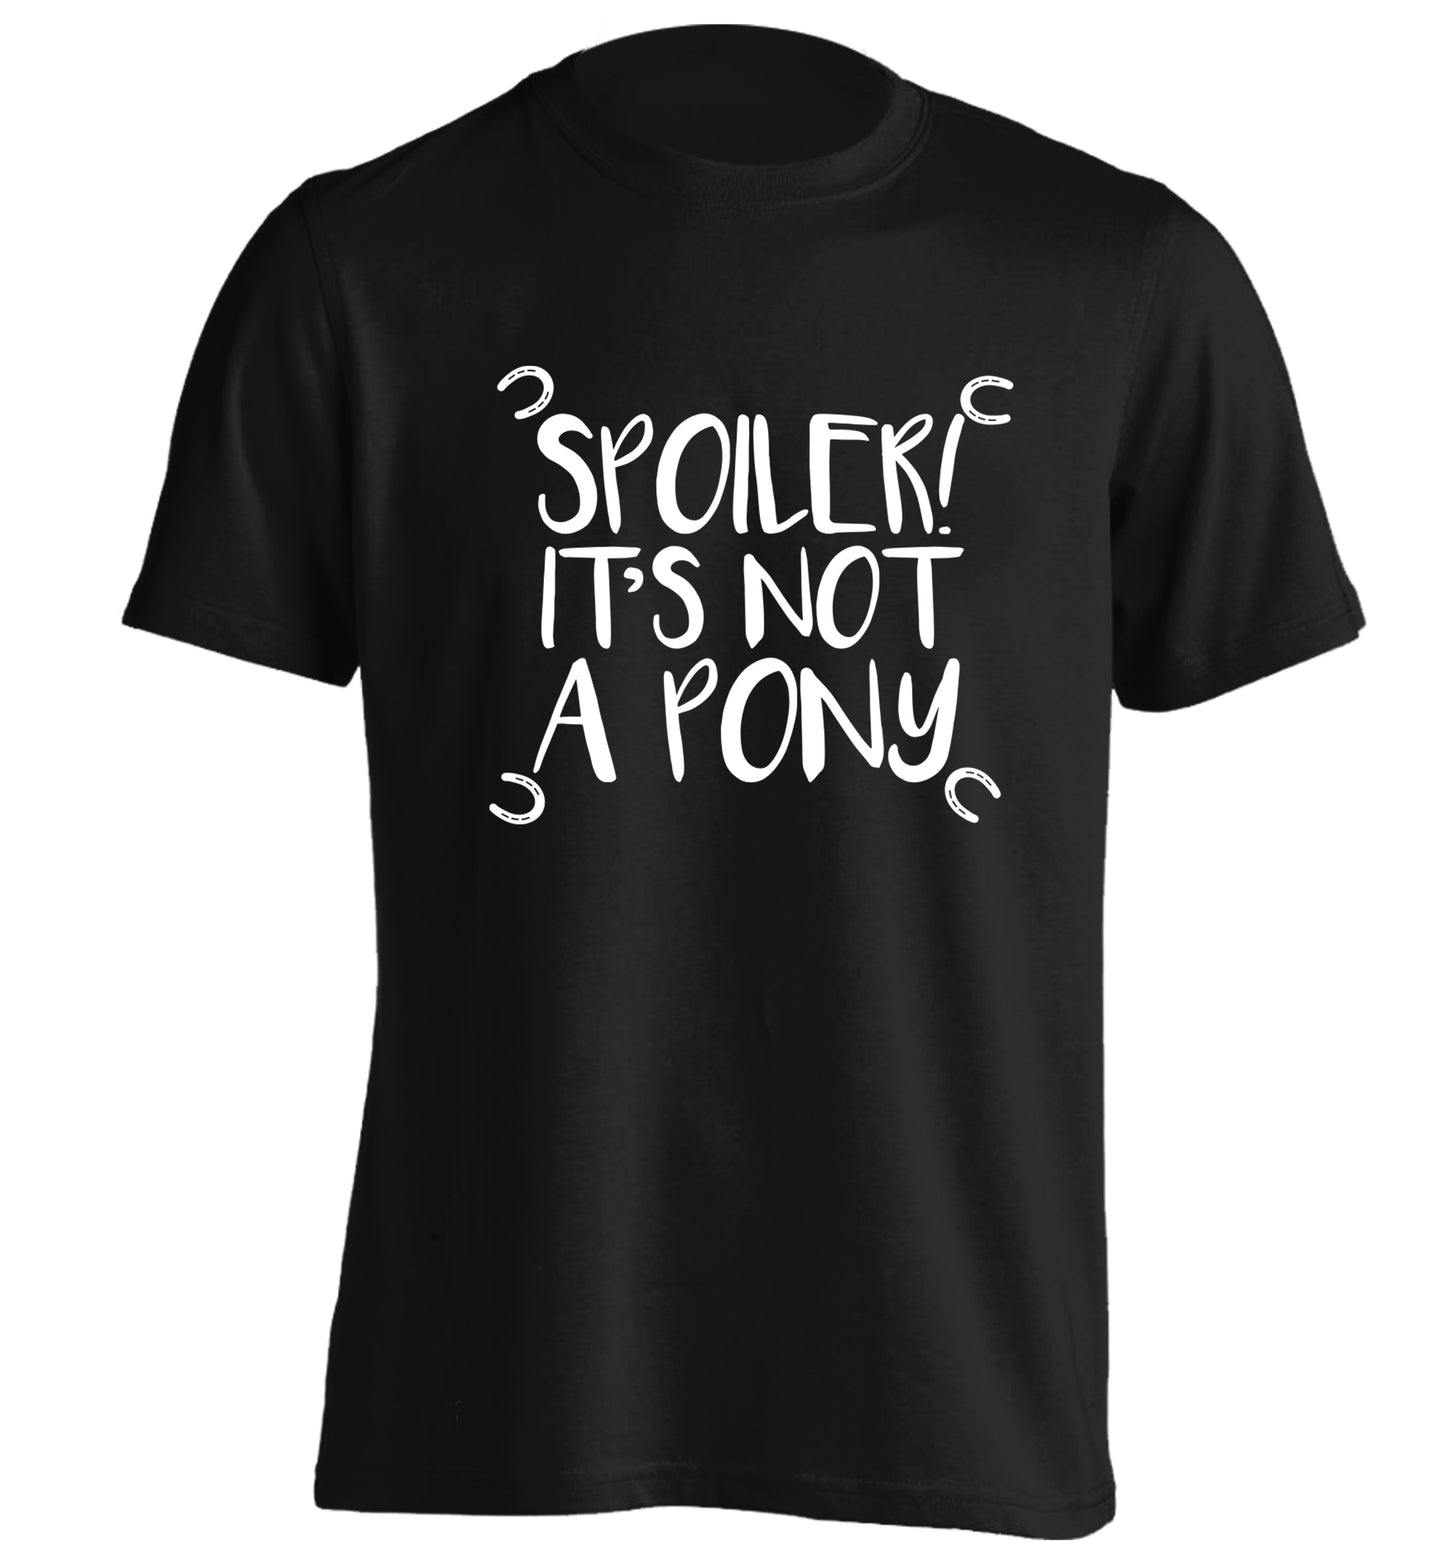 Spoiler it's not a pony adults unisex black Tshirt 2XL